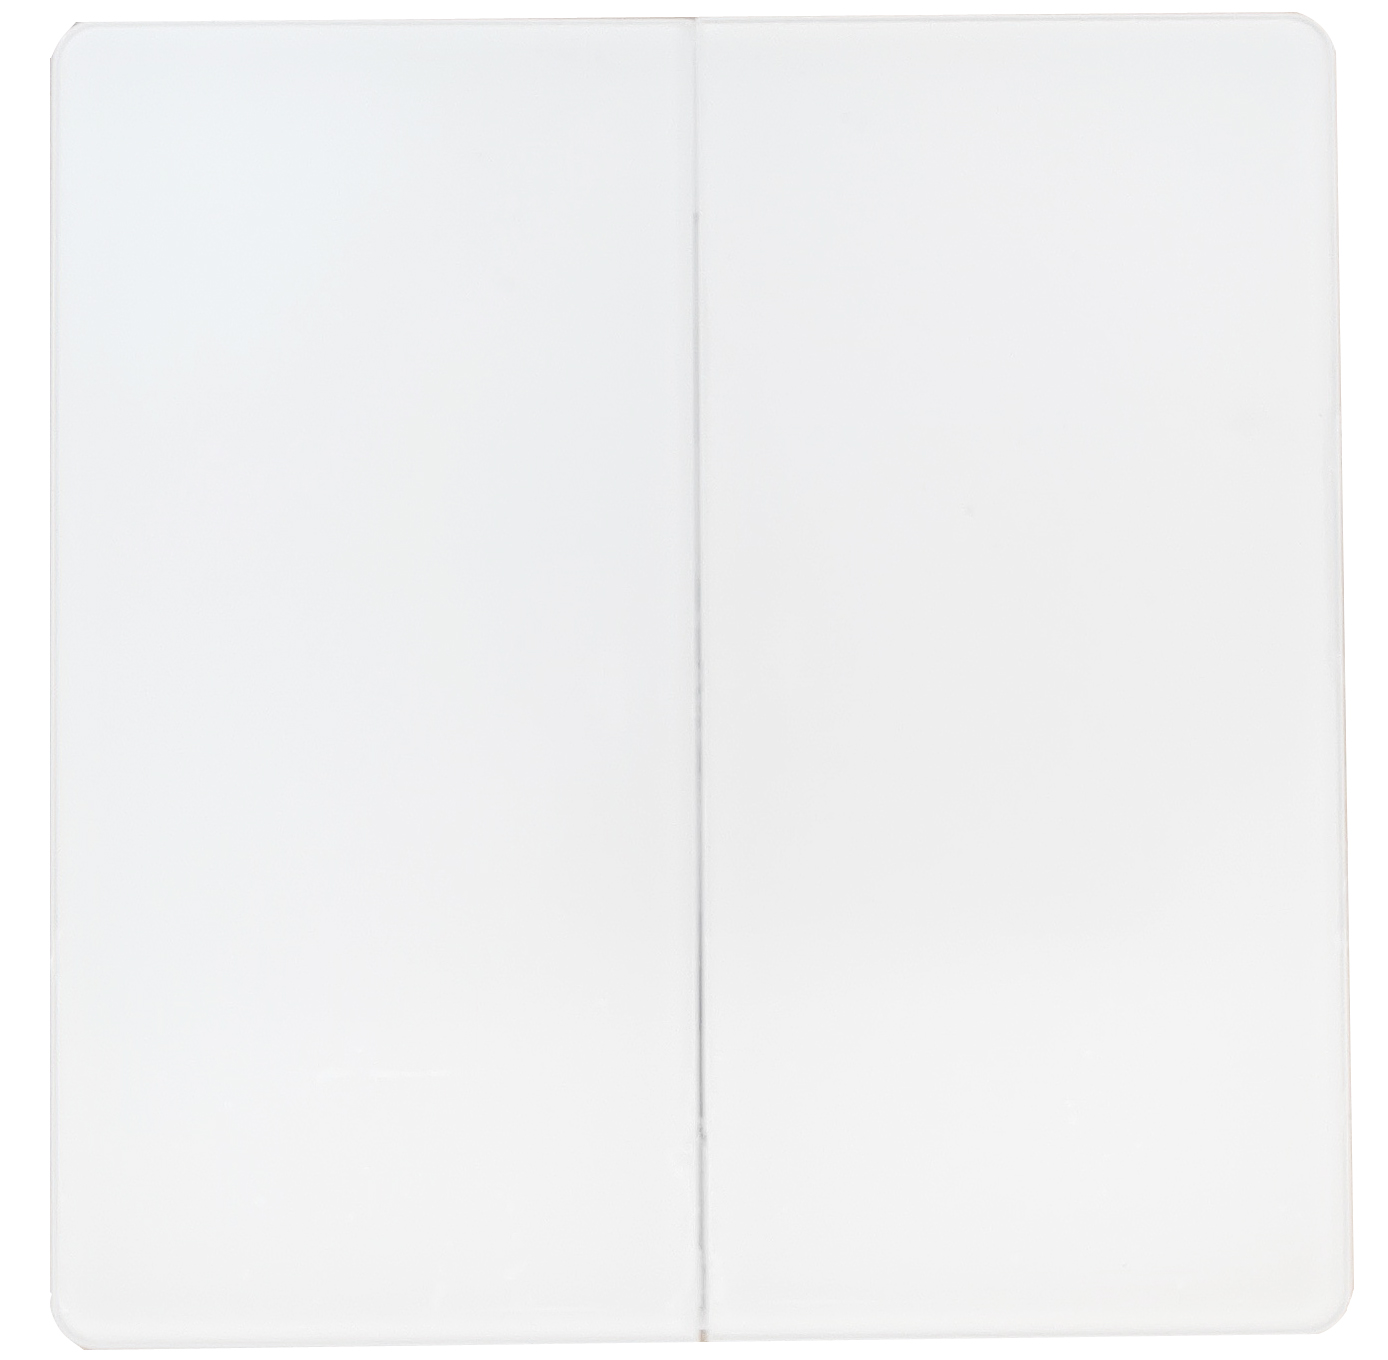 panel kaca ultra tipis warna putih 2gang 10A Wall Switch